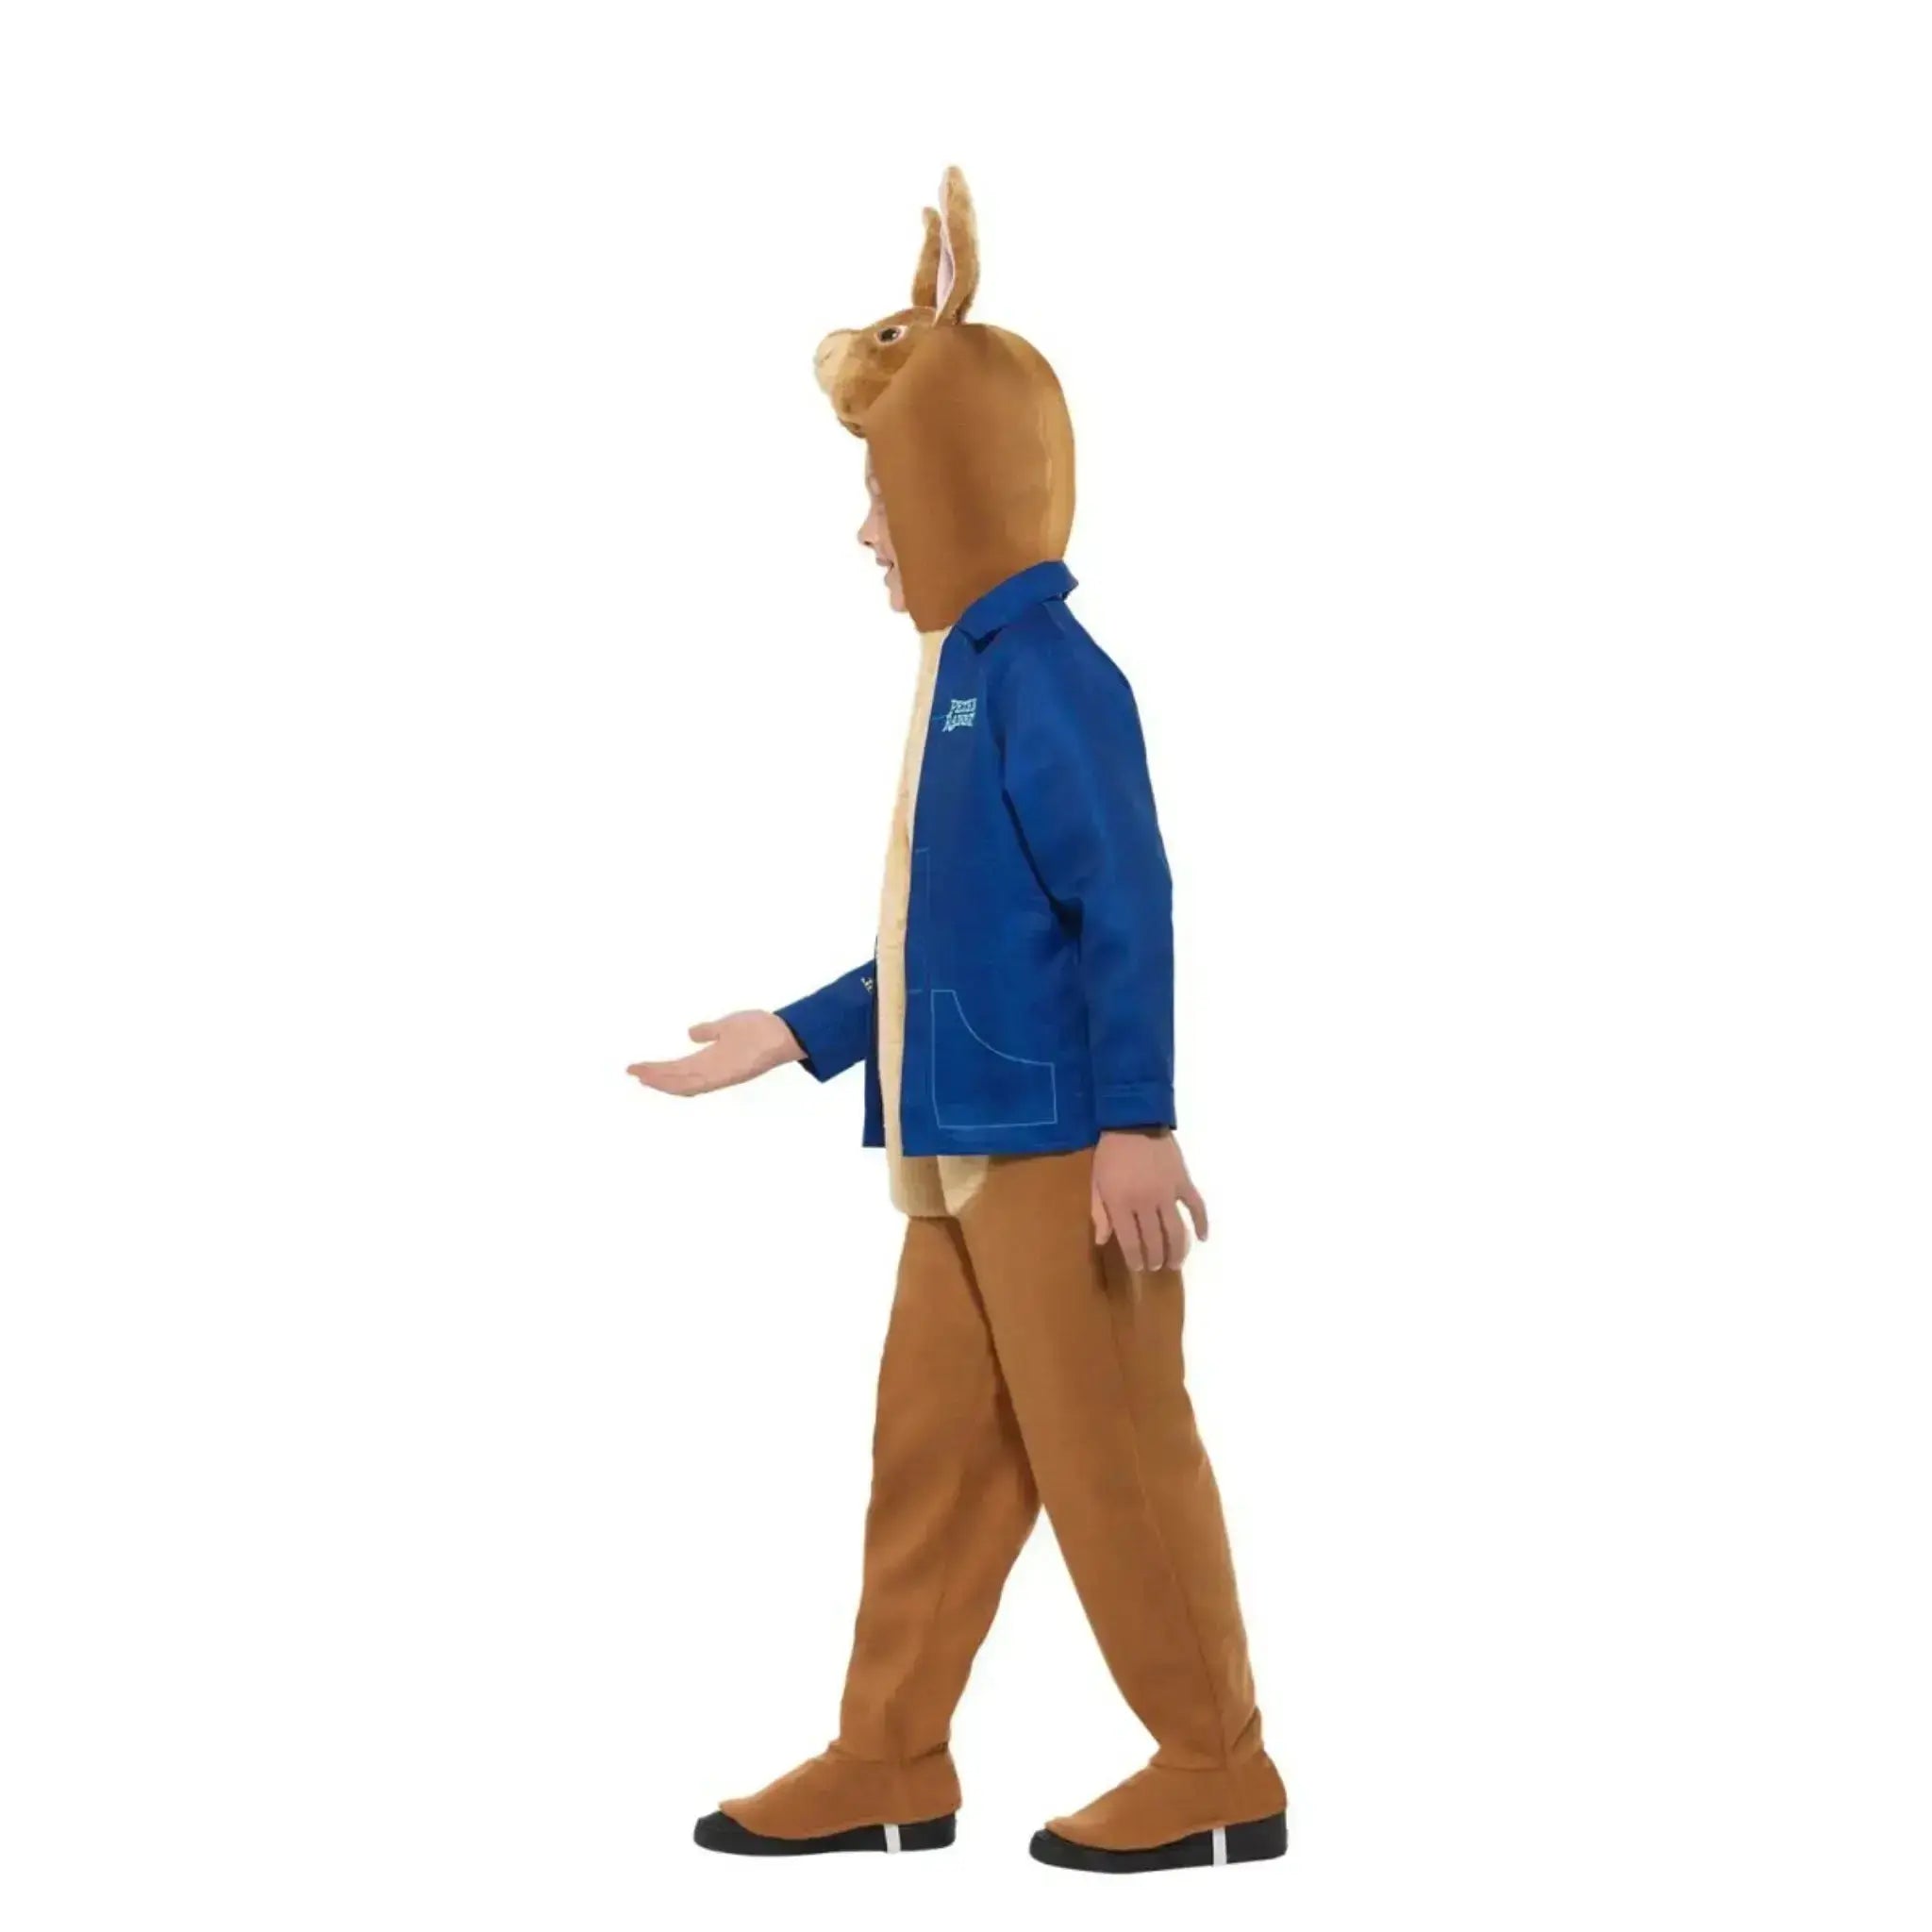 Peter Rabbit Costume (Kids) | The Party Hut